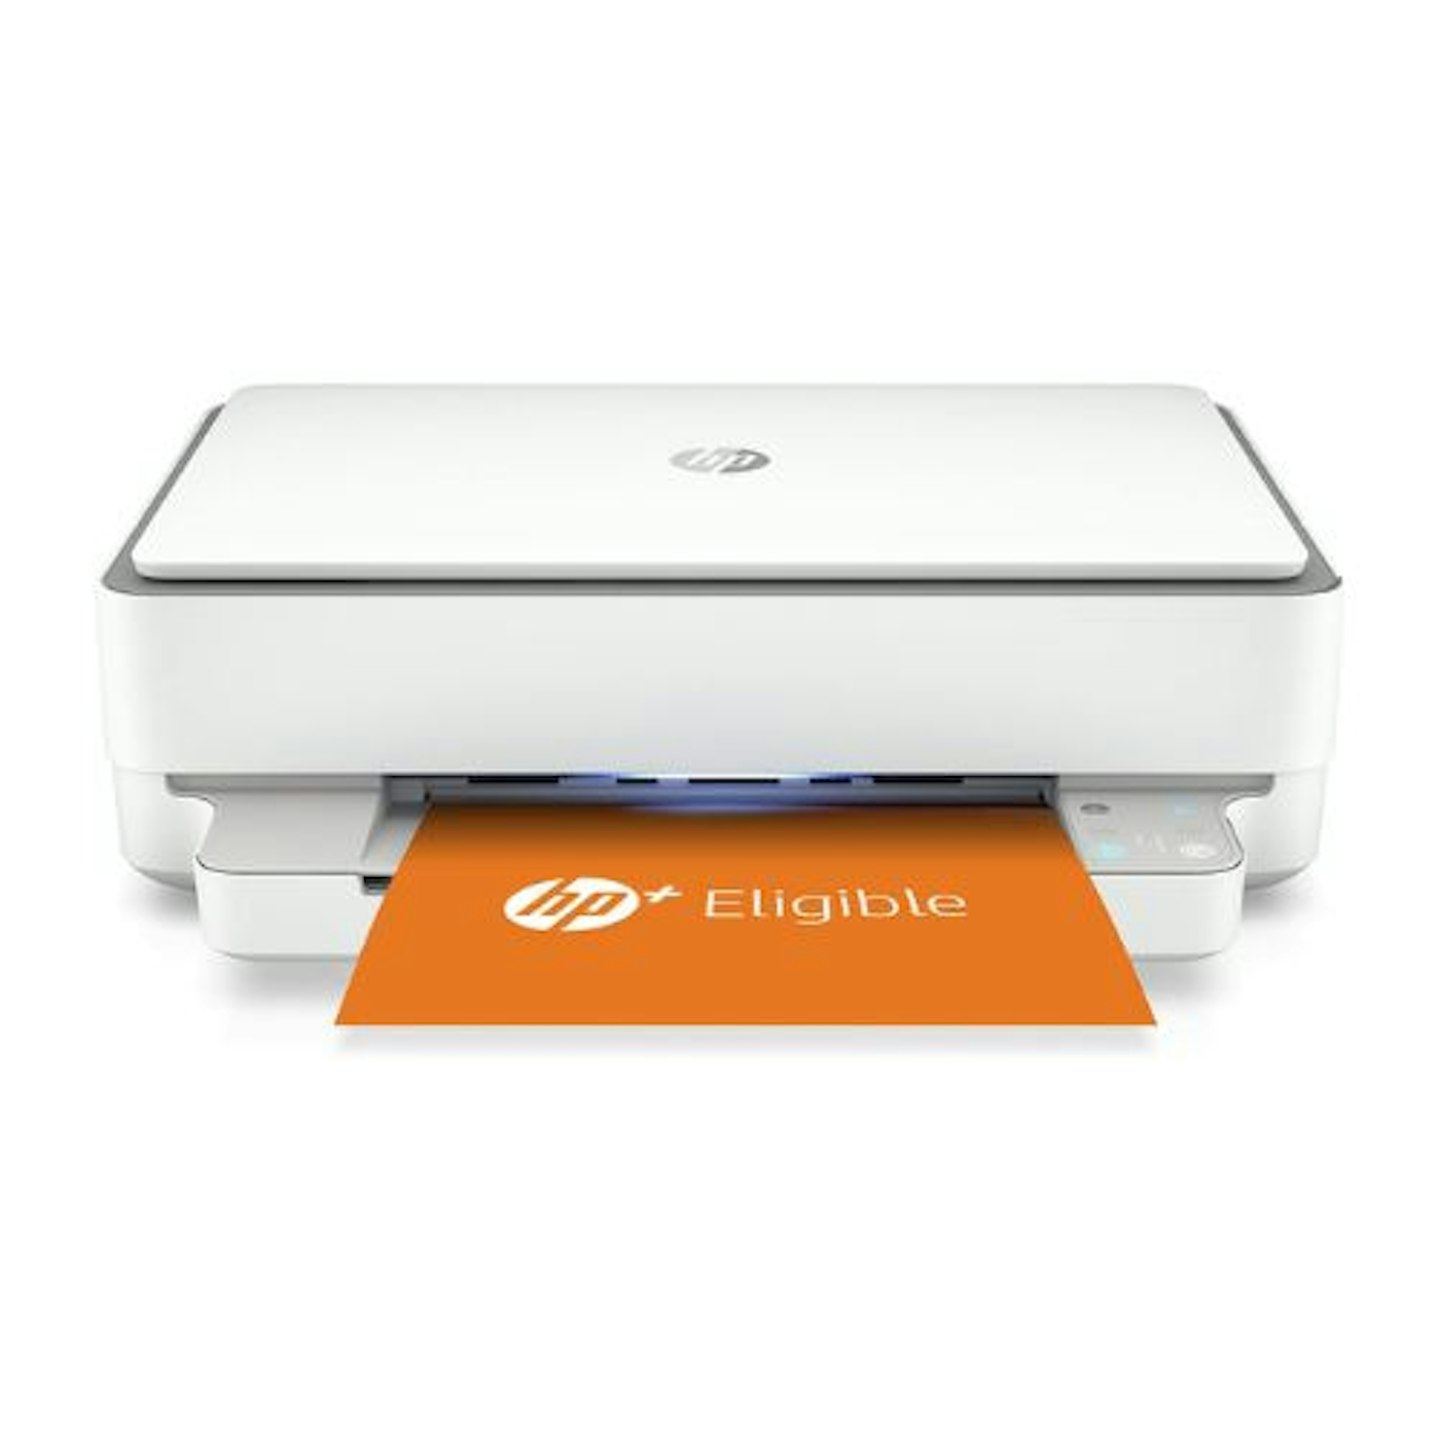 HP Envy 6020e All-in-One Colour Printer